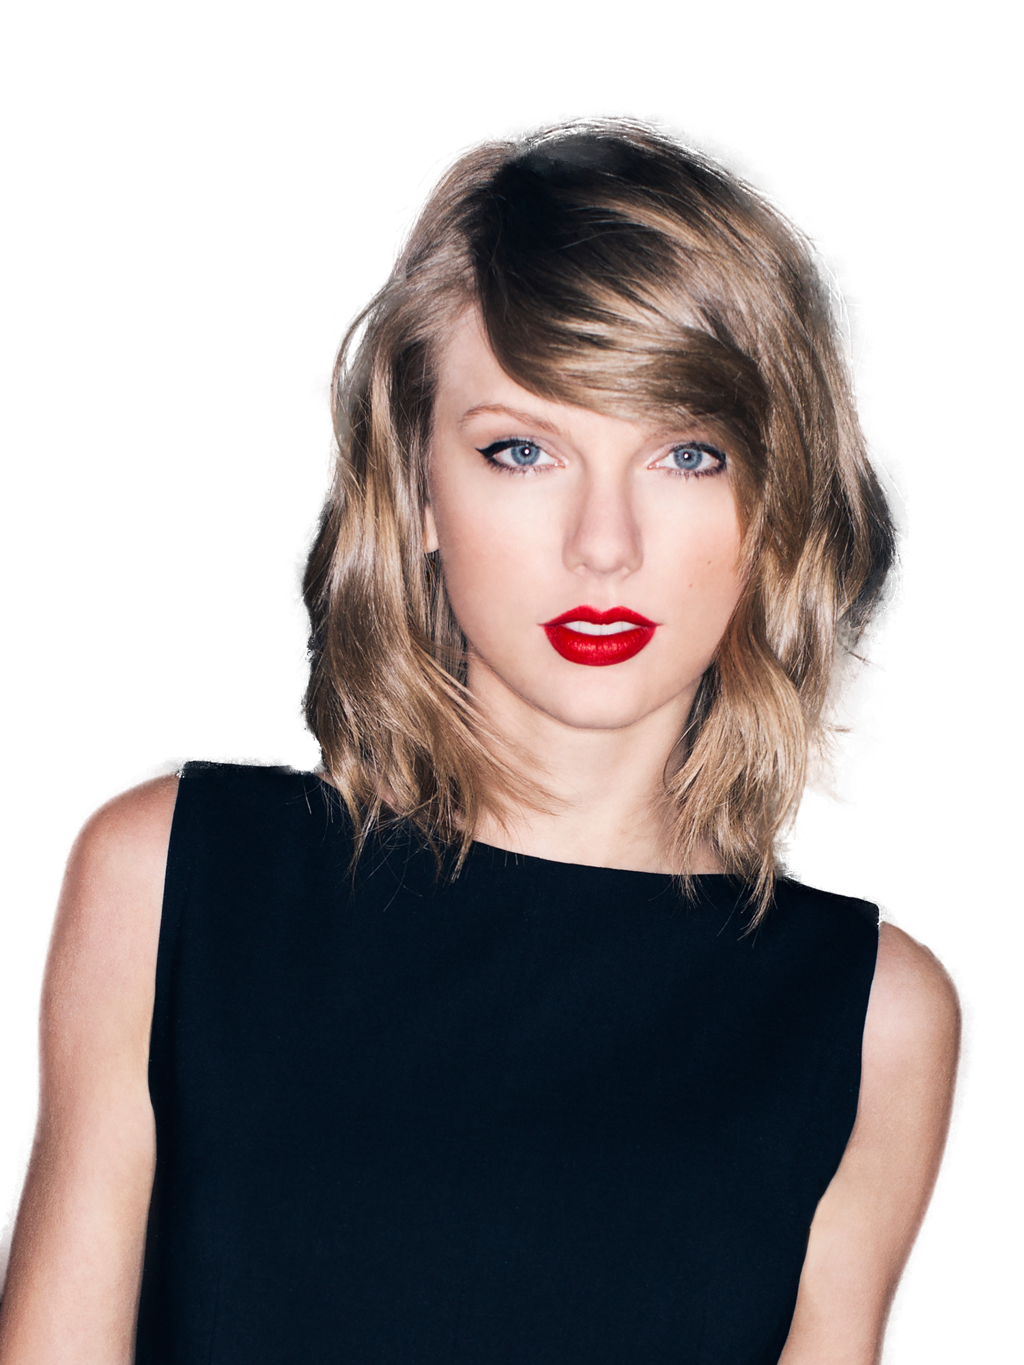 Taylor Swift Photos PNG Image